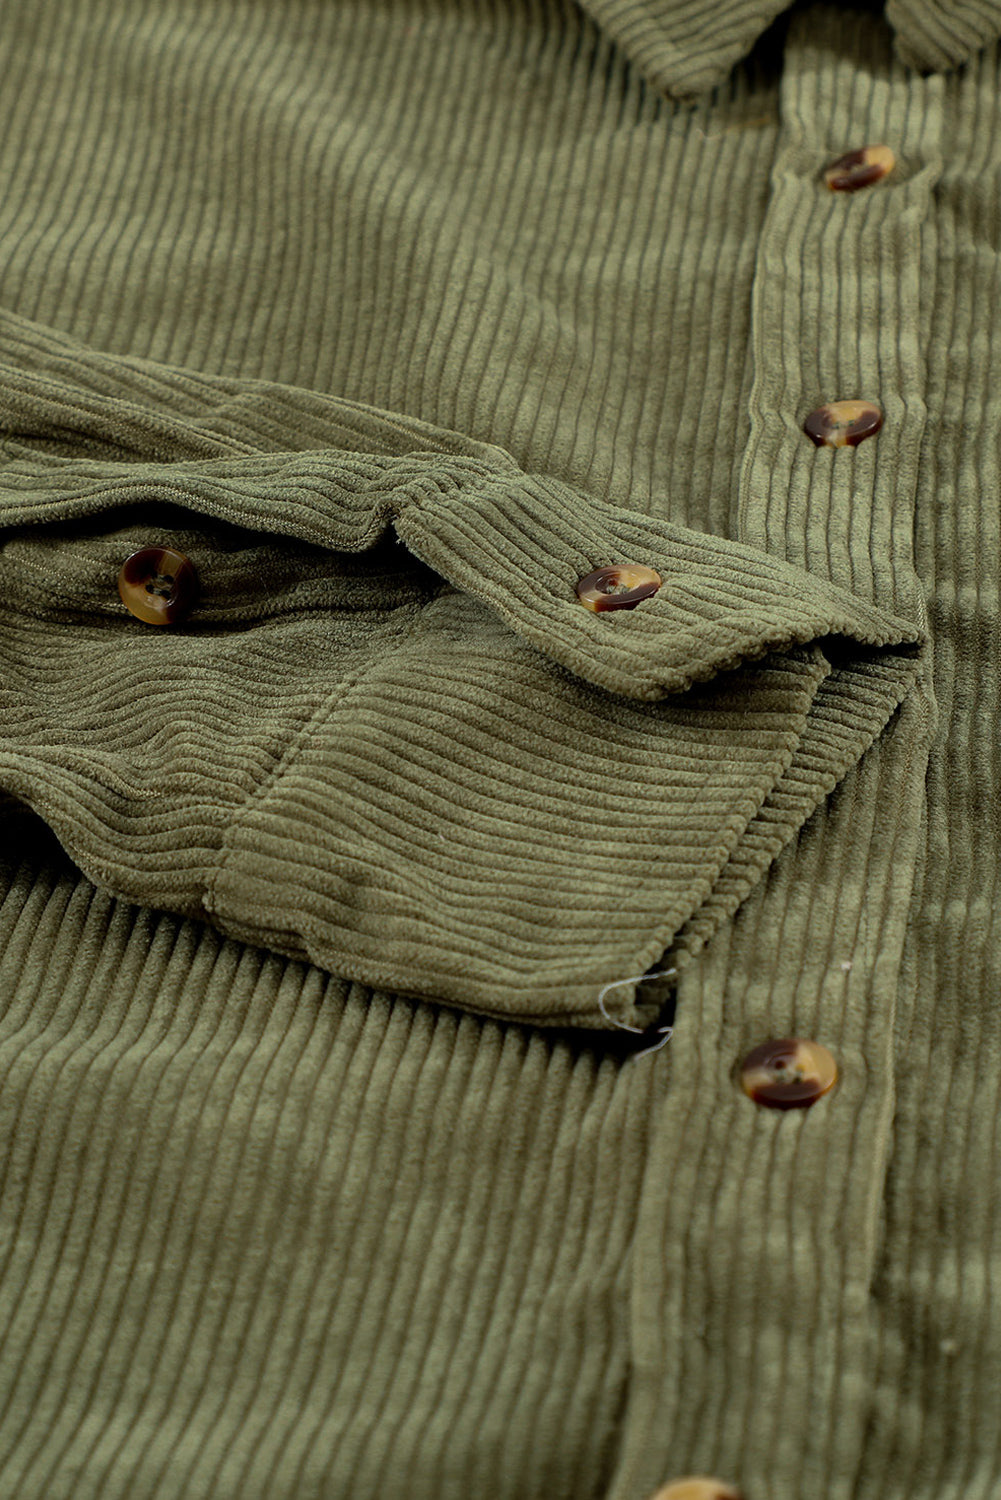 Green Corduroy Button Pocket Shirt